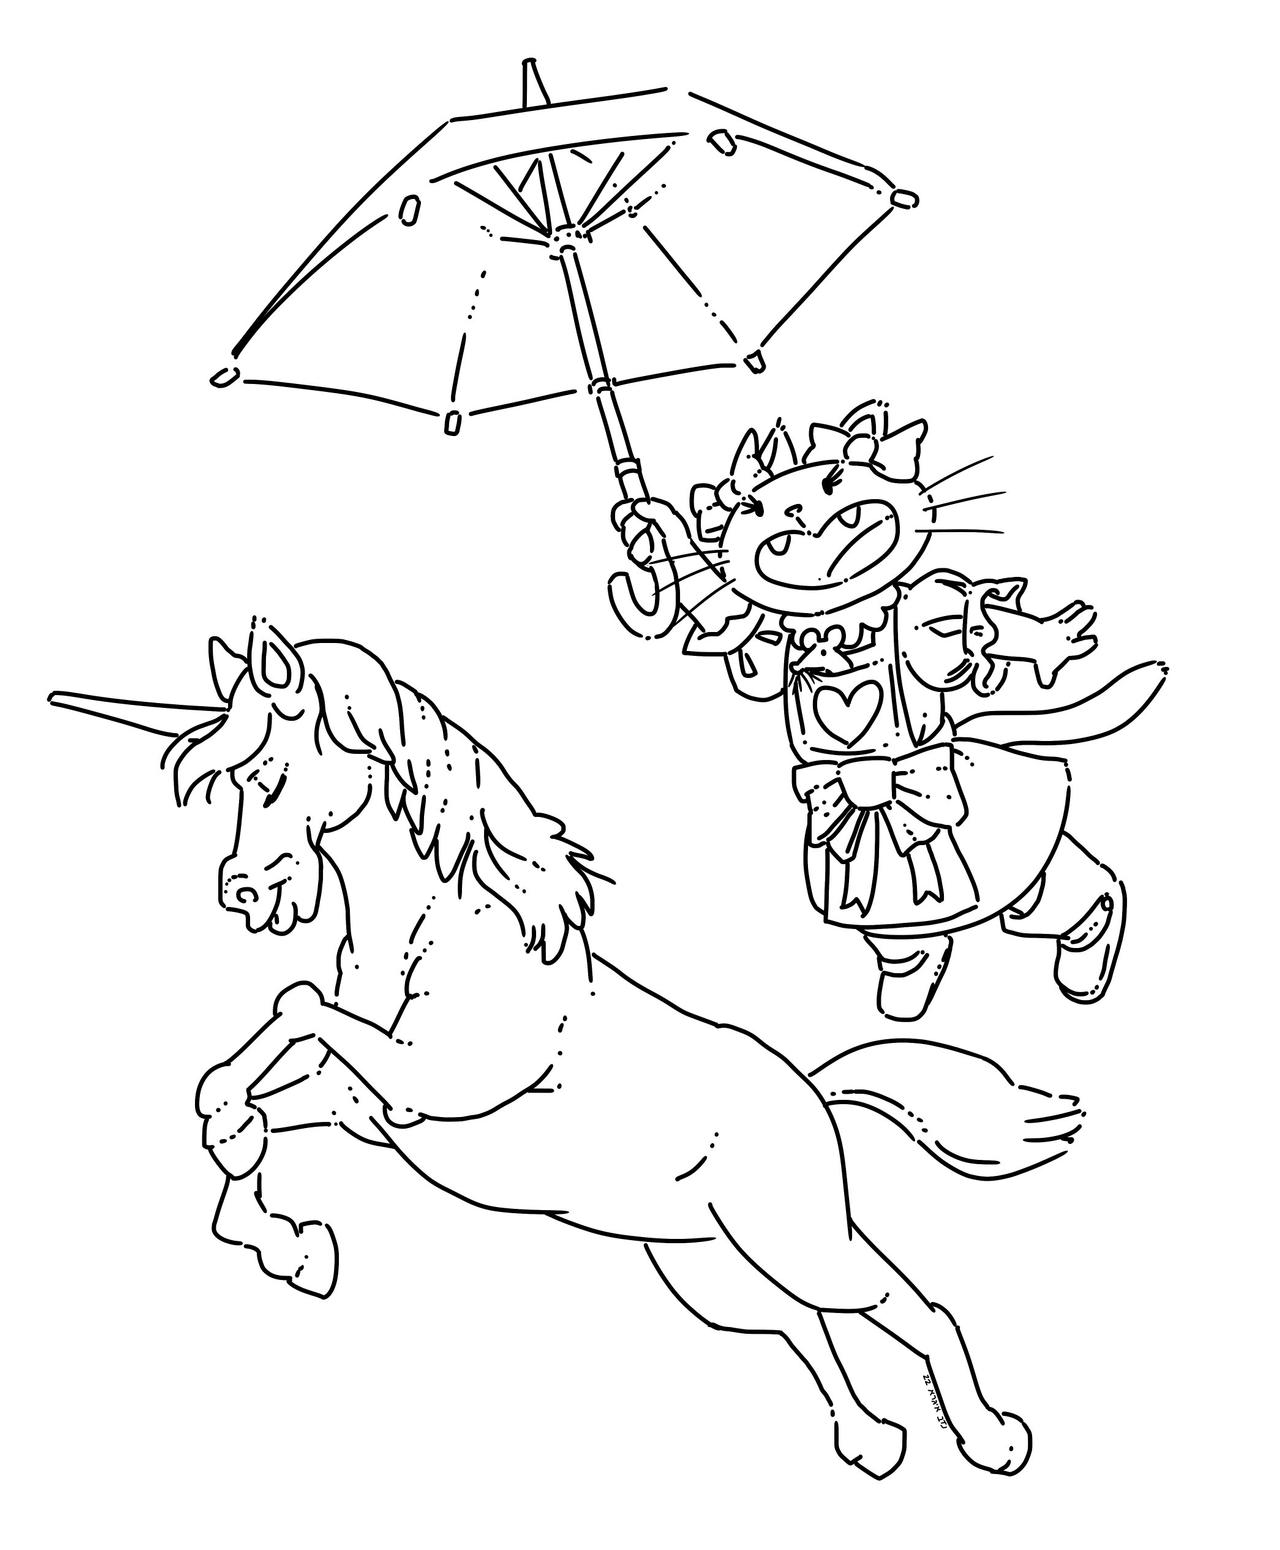 Princess rain cat and unicorn coloring page by nadavigra on